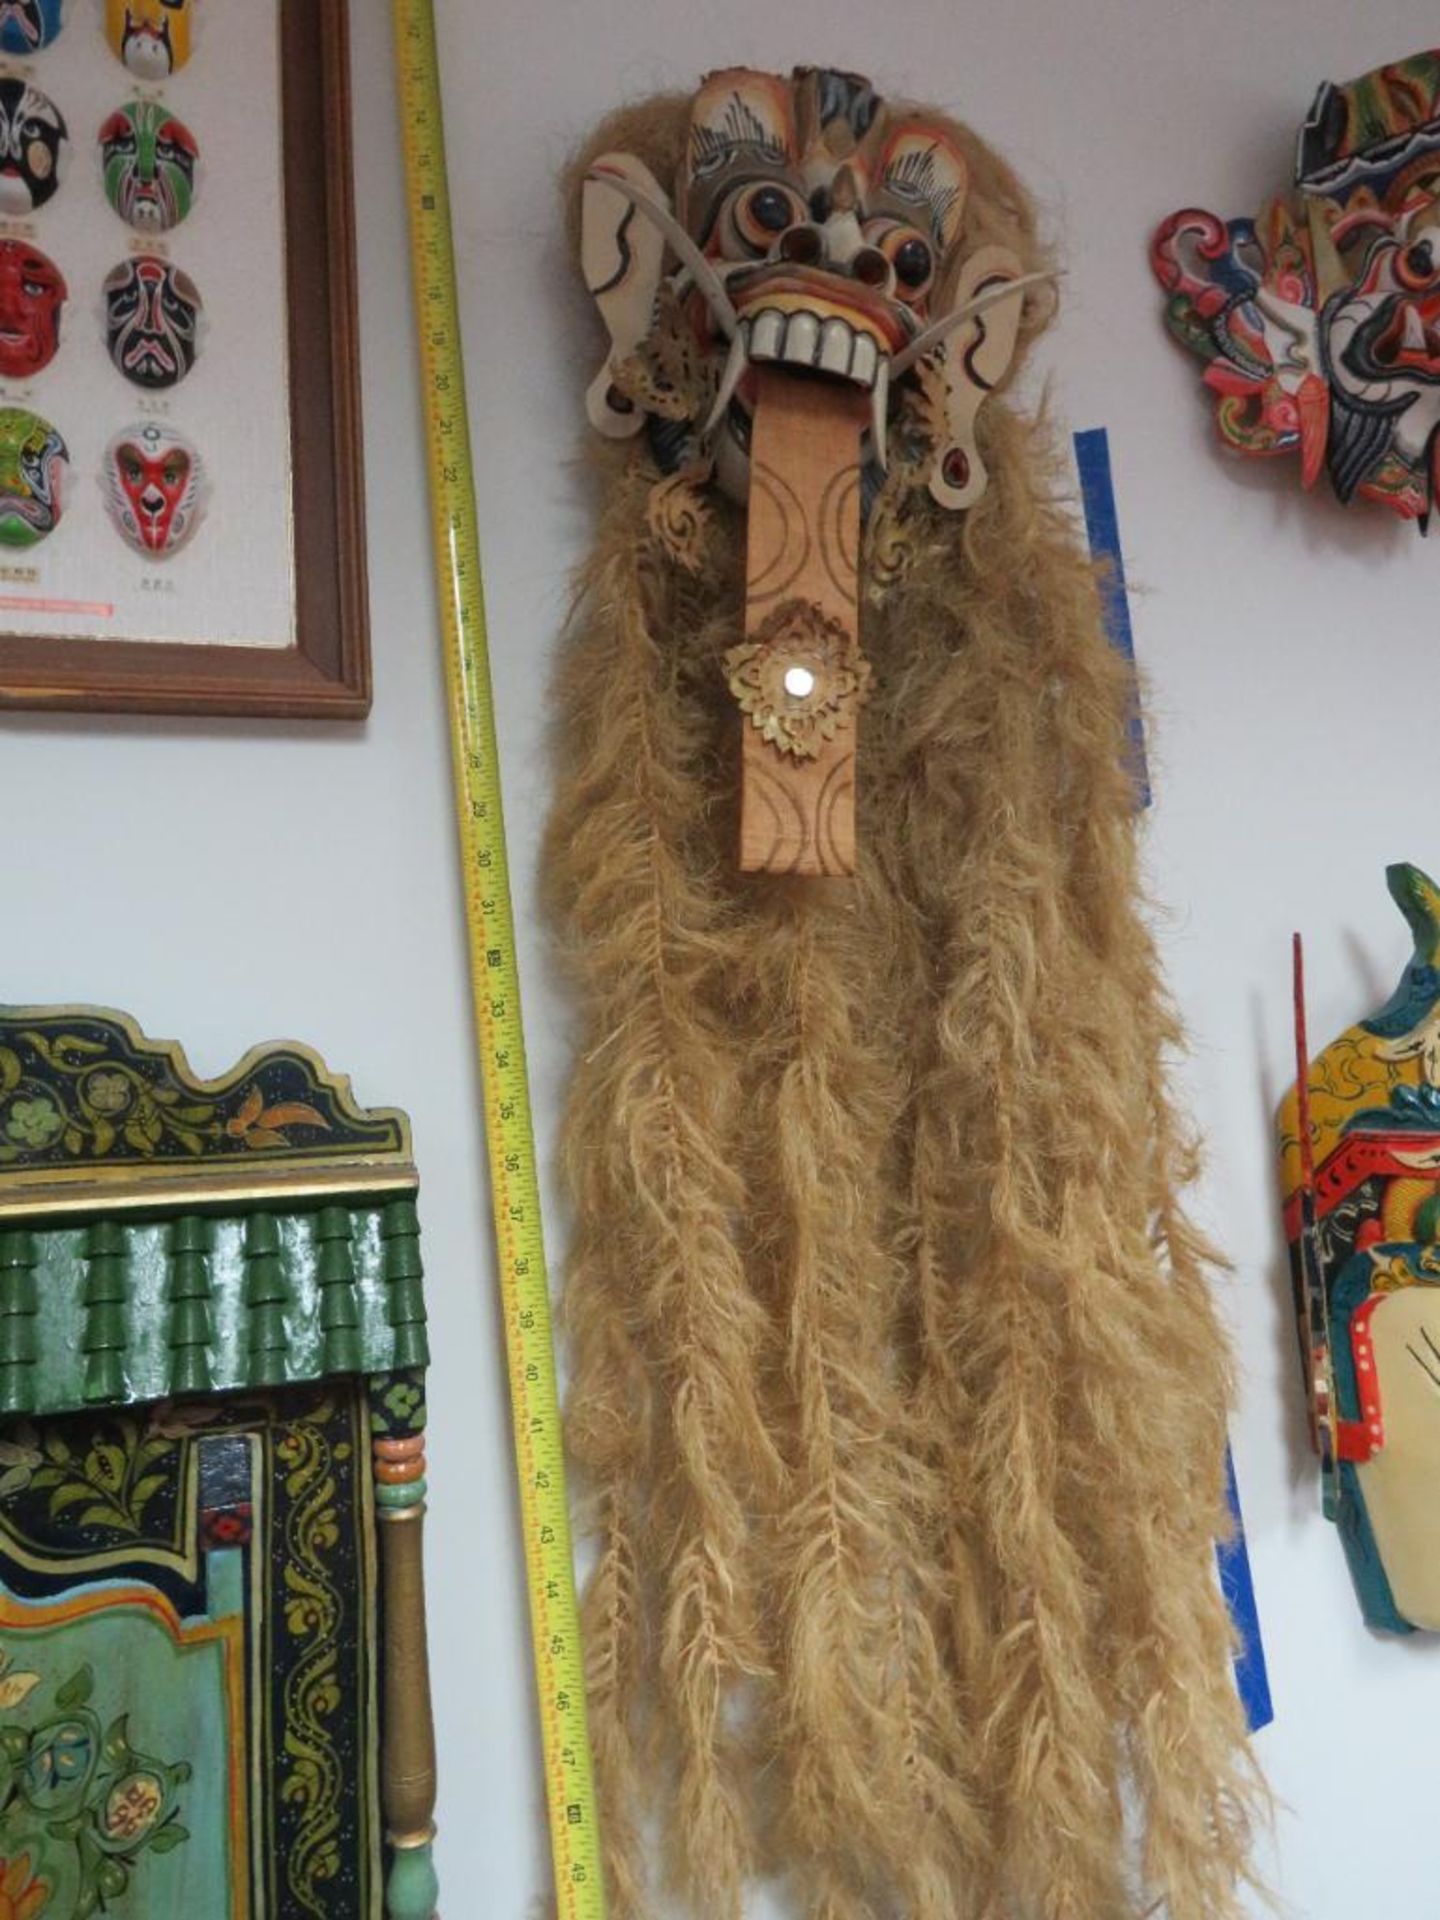 Lot c/o: (3) Tribal Masks and (2) Hanging Wall Decor. - Image 5 of 6